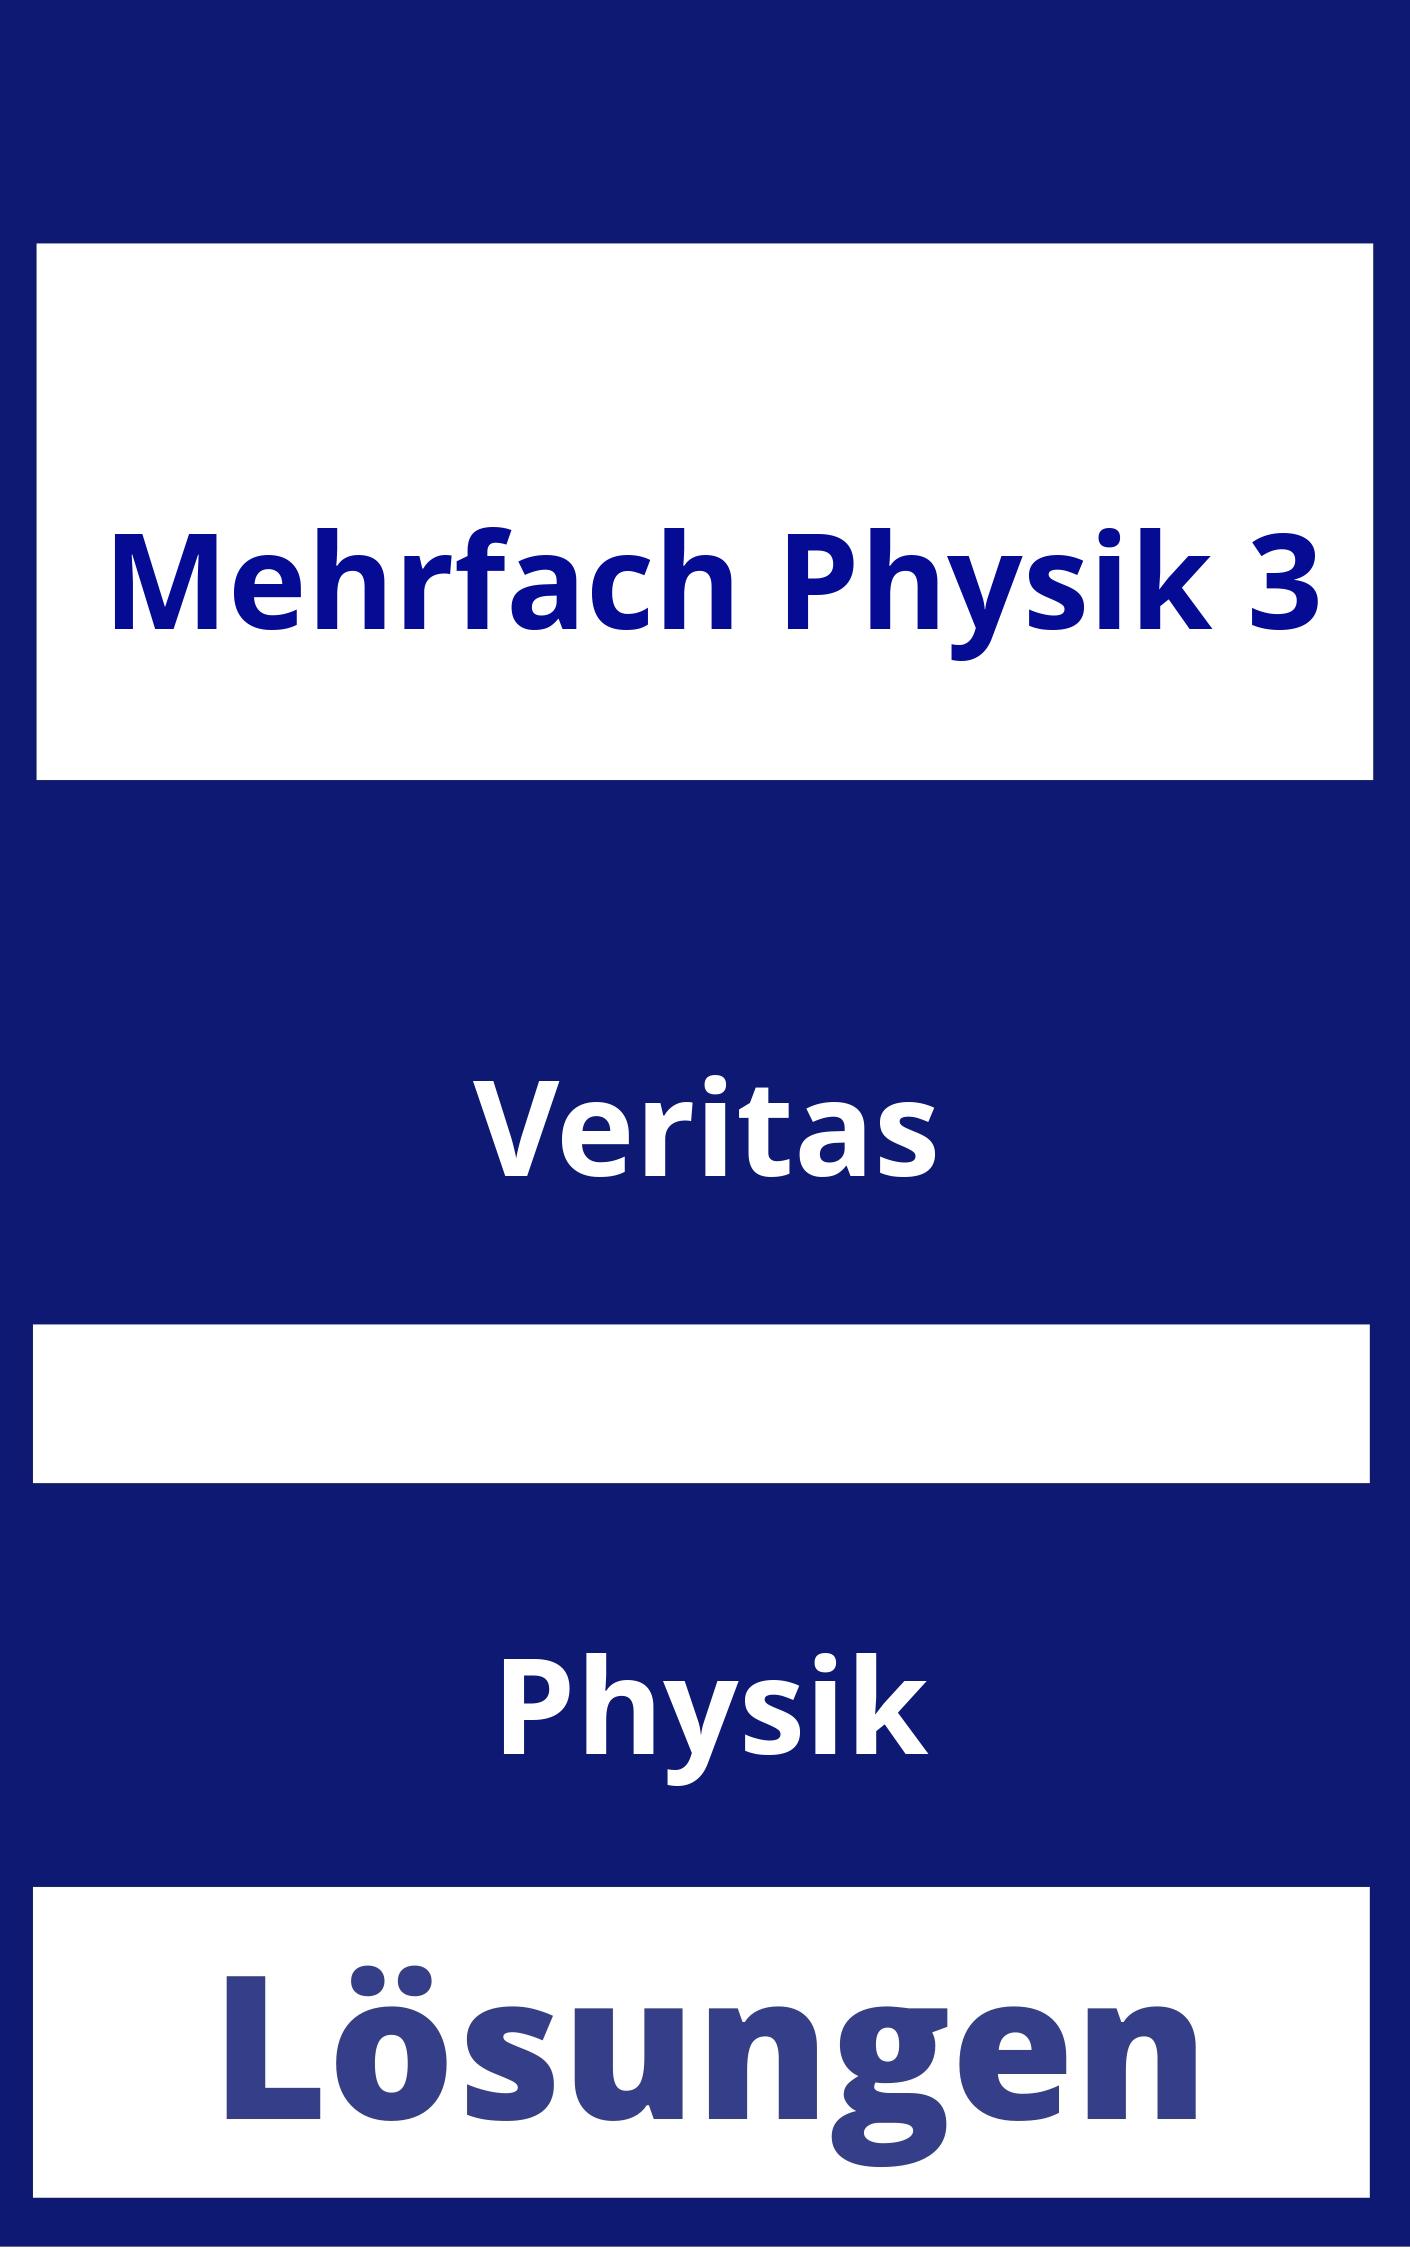 MEHRfach Physik 3